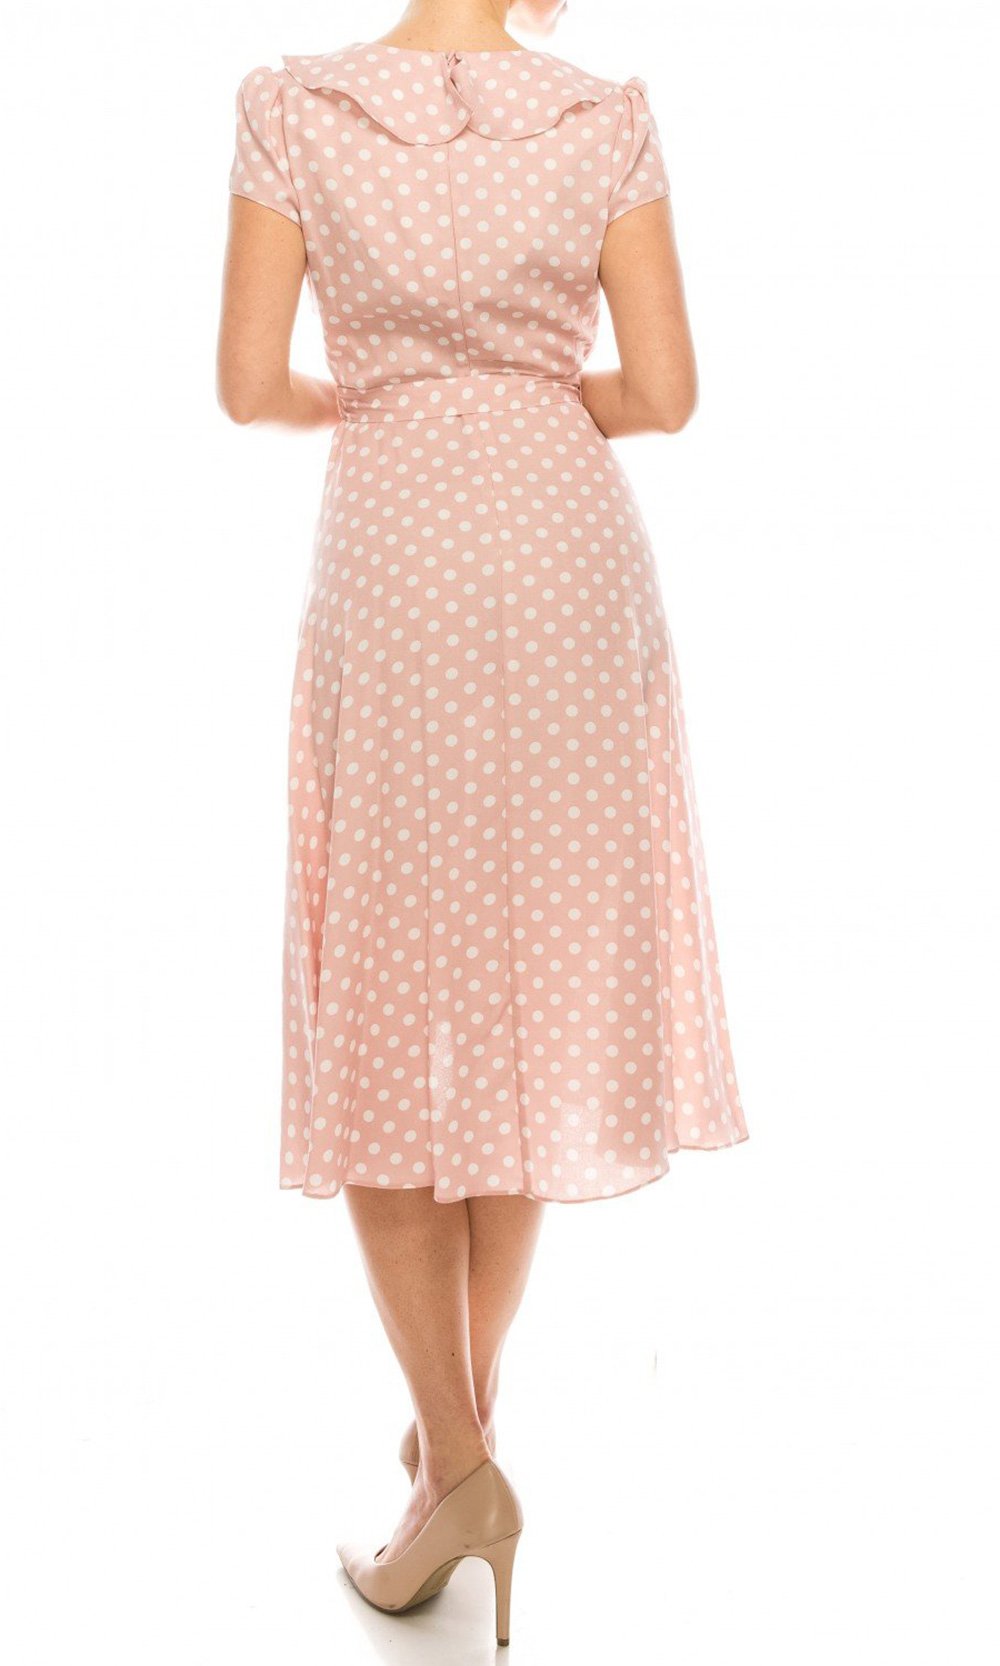 Gabby Skye - 57538MG Polka Dot Ruffle Neckline Faux Wrap Dress In Pink and White